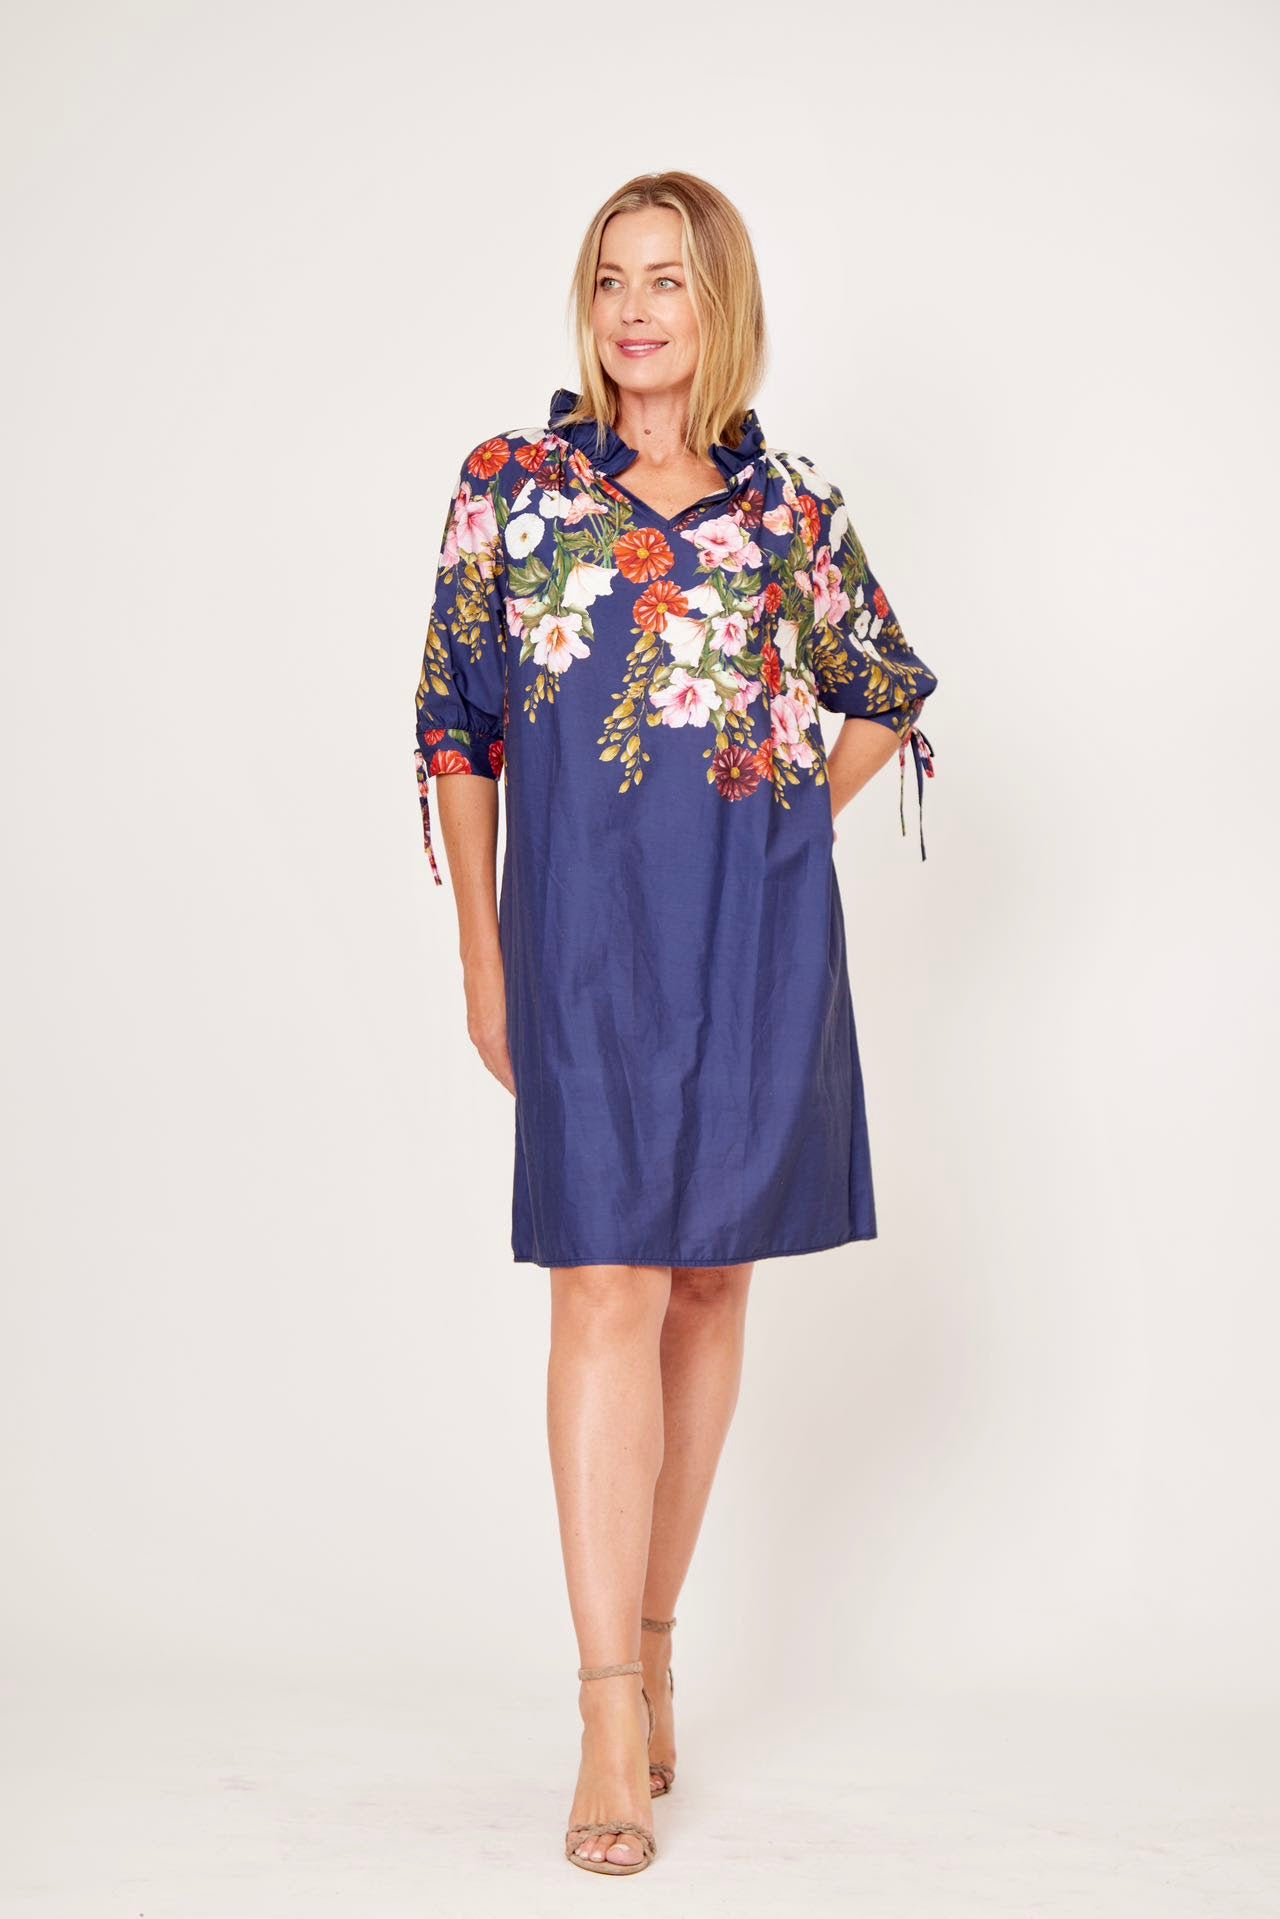 La Strada Navy/Floral Print Cotton Dress